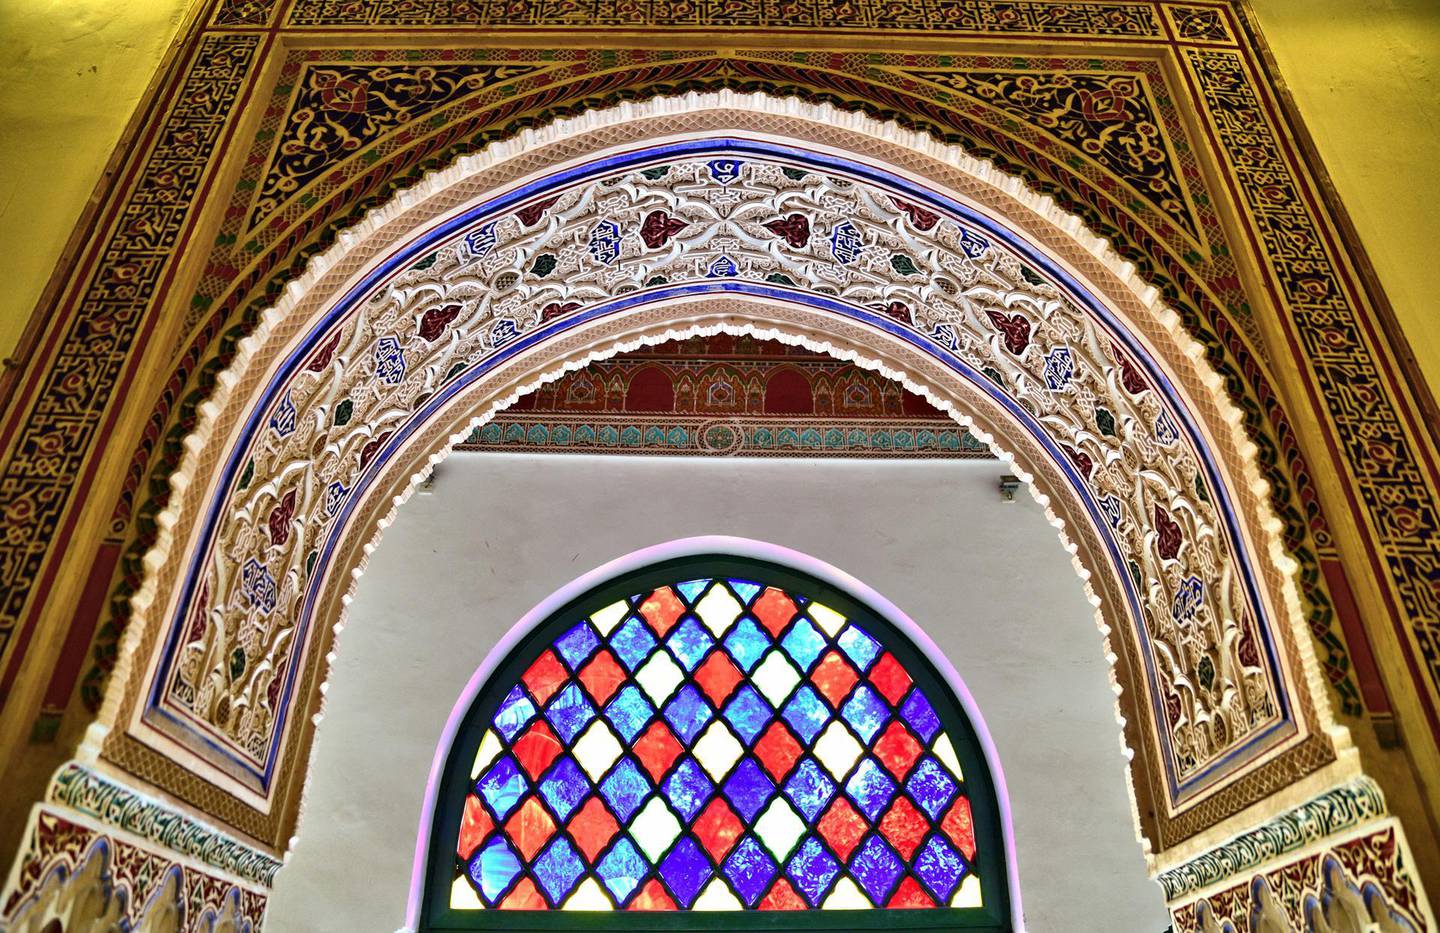 Moroccan Islamic architecture - Bahia Palace. Courtesy Ronan O’Connell